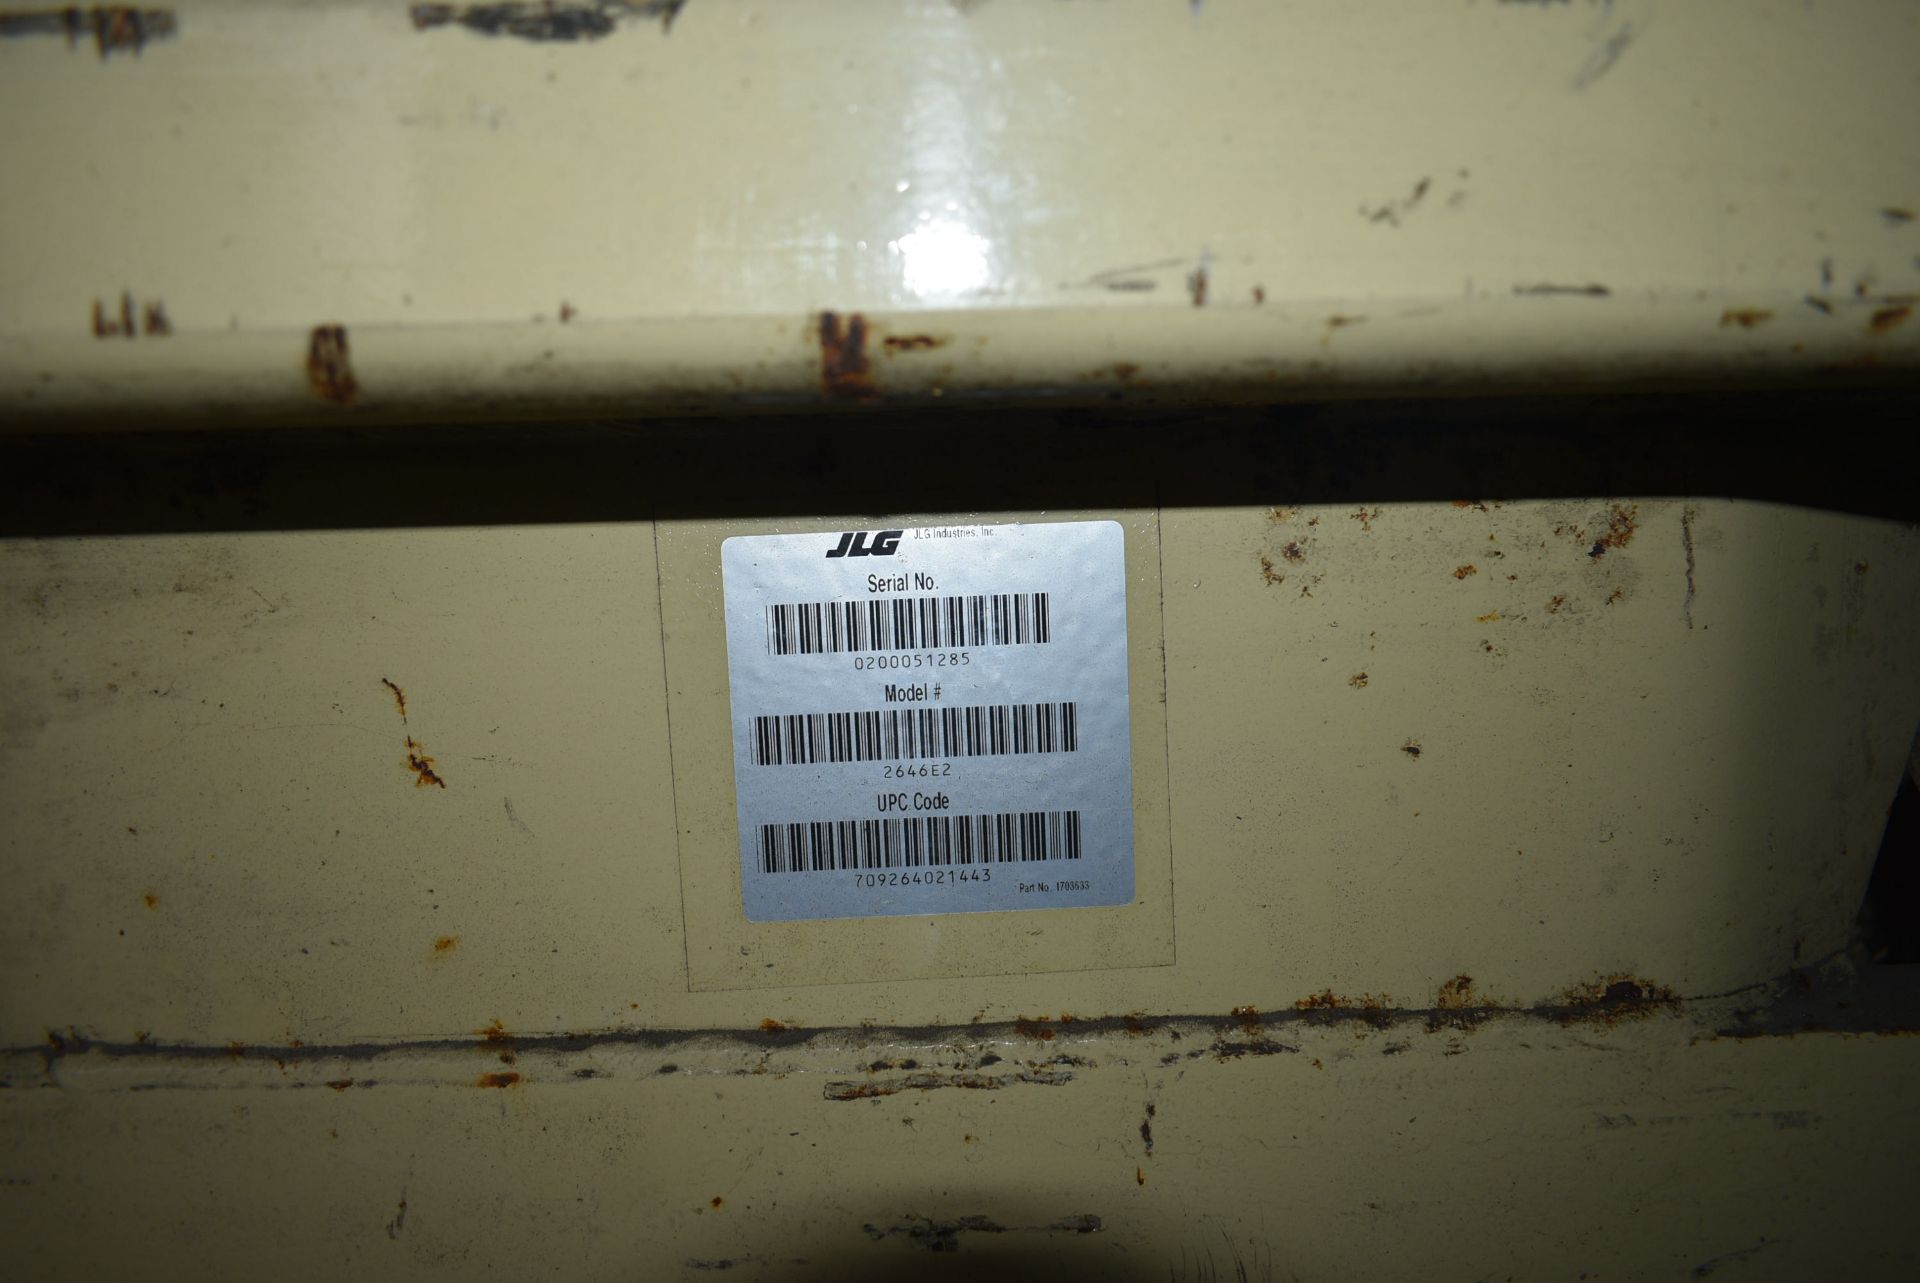 JLG 2646E2 BATTERY ELECTRIC SCISSOR LIFT ACCESS PLATFORM MEWP, serial no. 0200051285, (not - Image 5 of 6